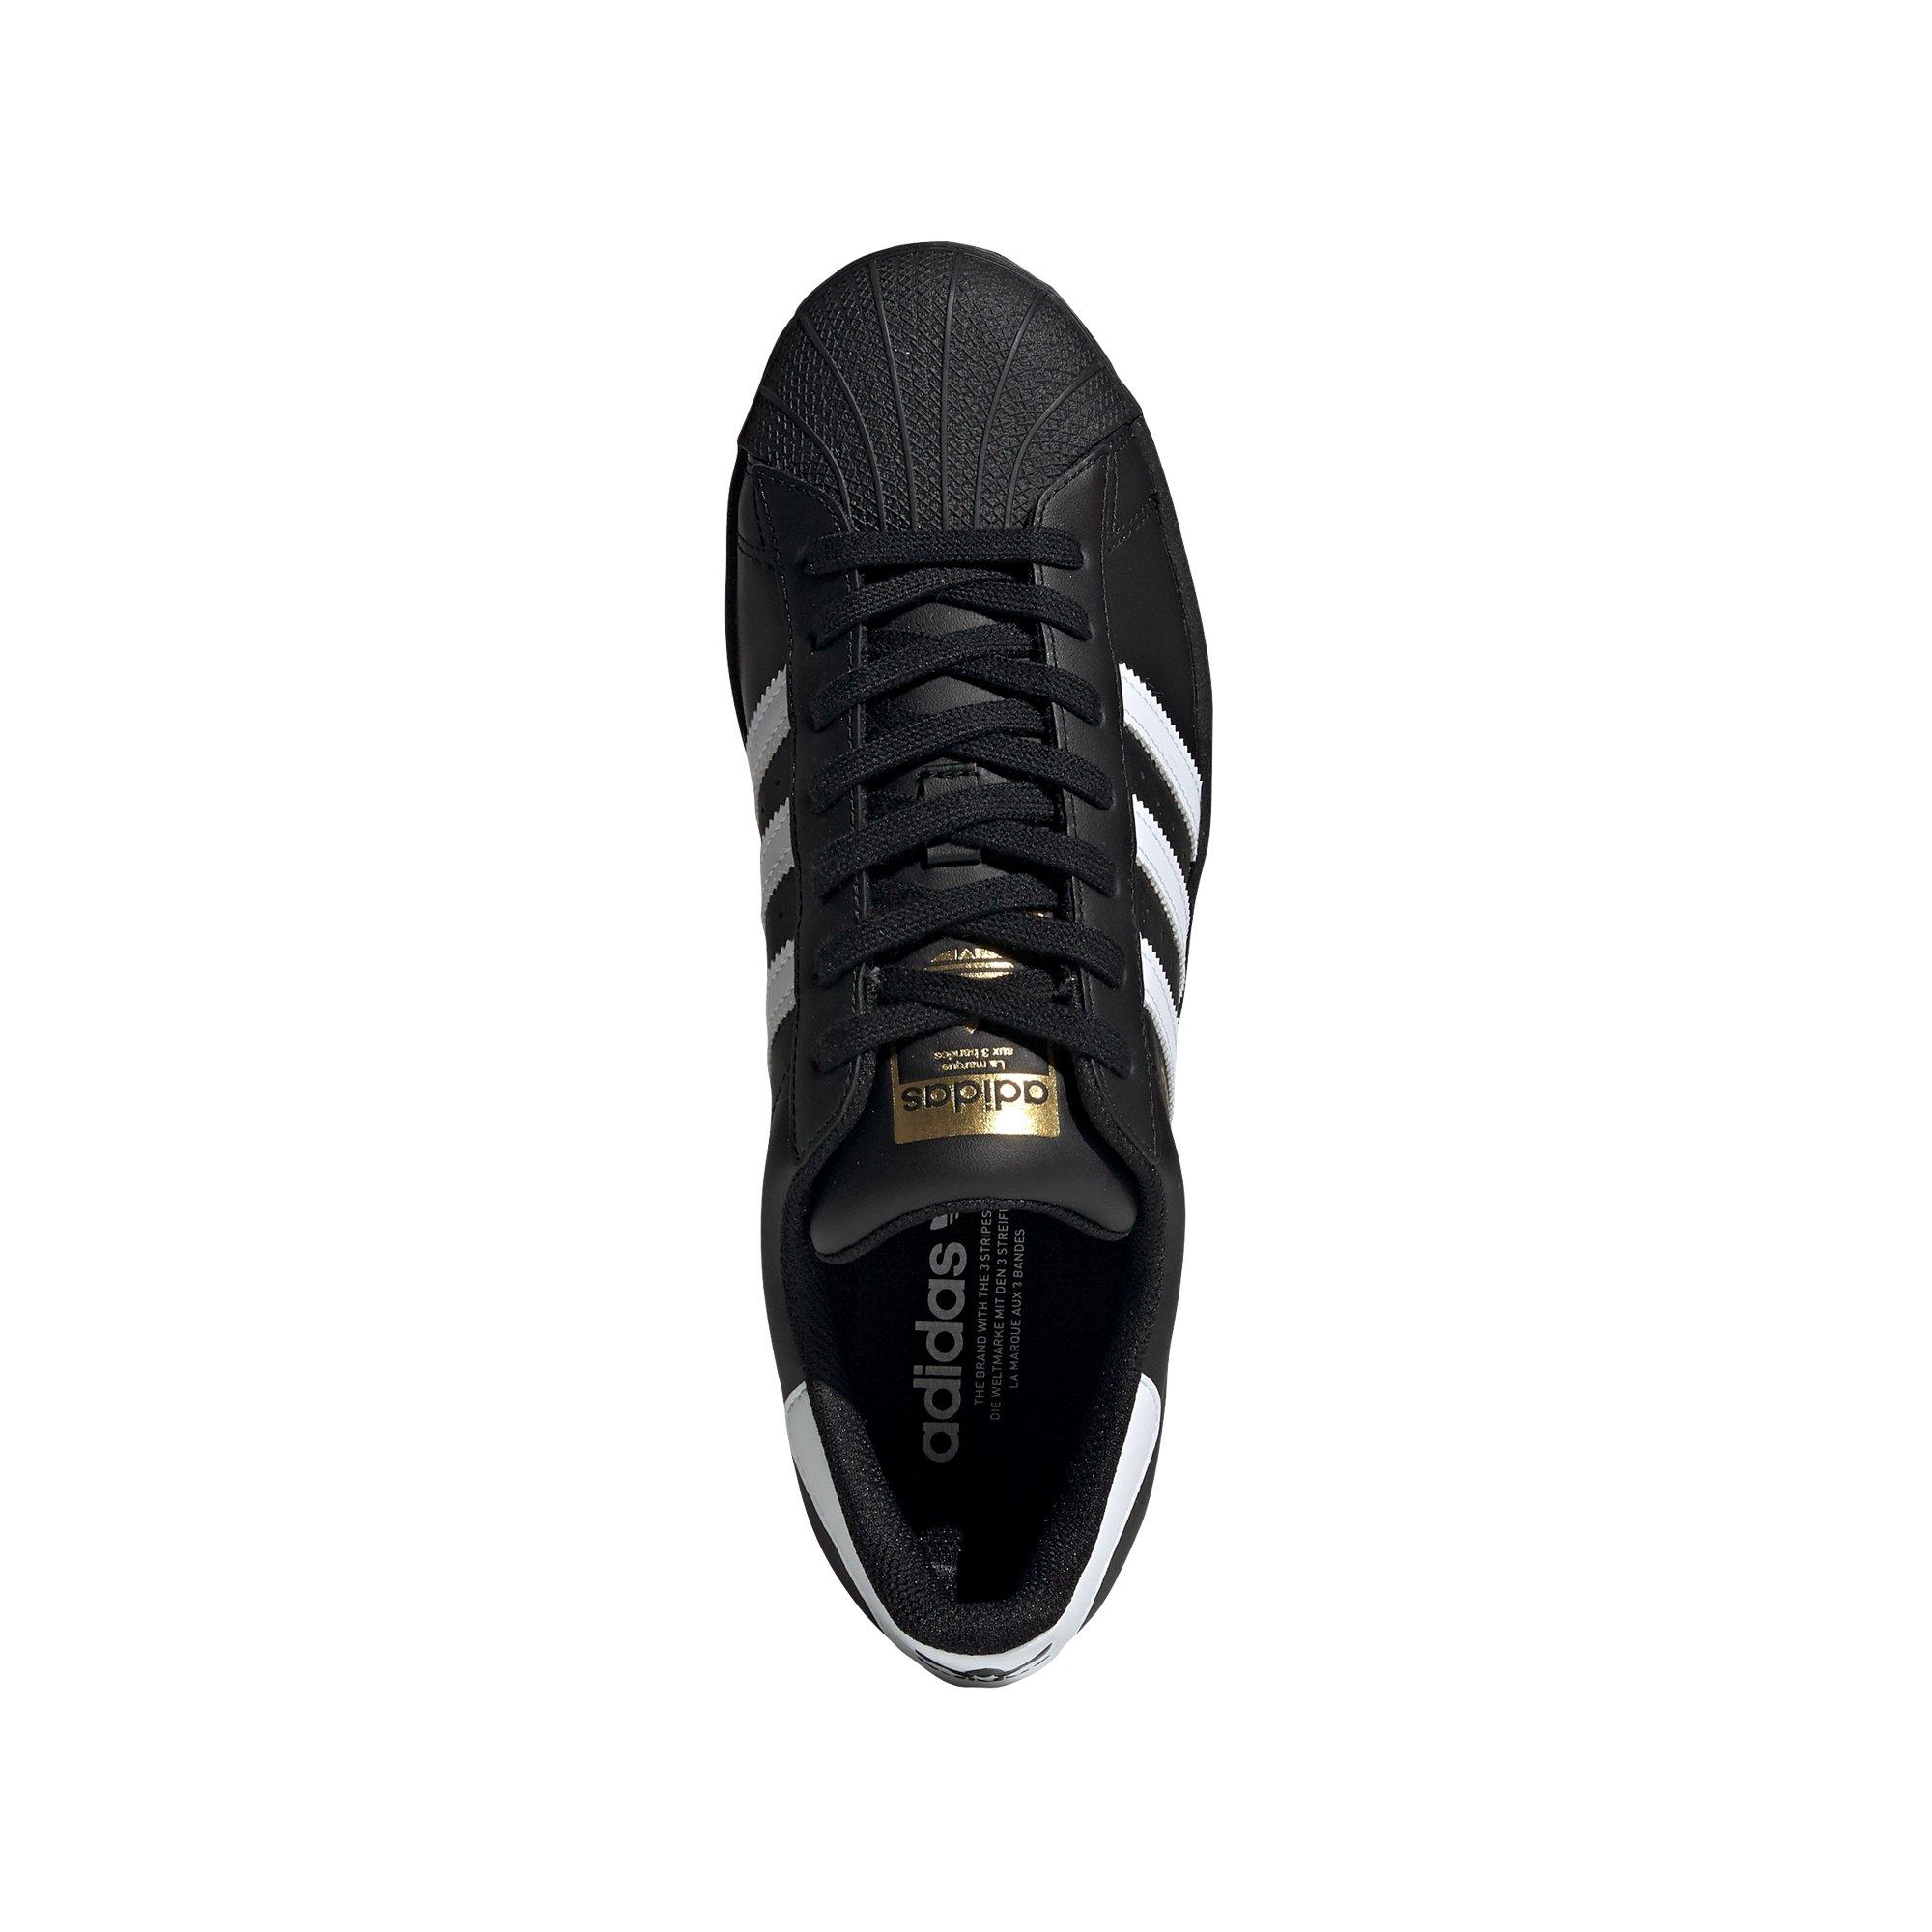 Adidas Superstar sneaker White Black Shell Toe triple stripe Men’s Size 8.5